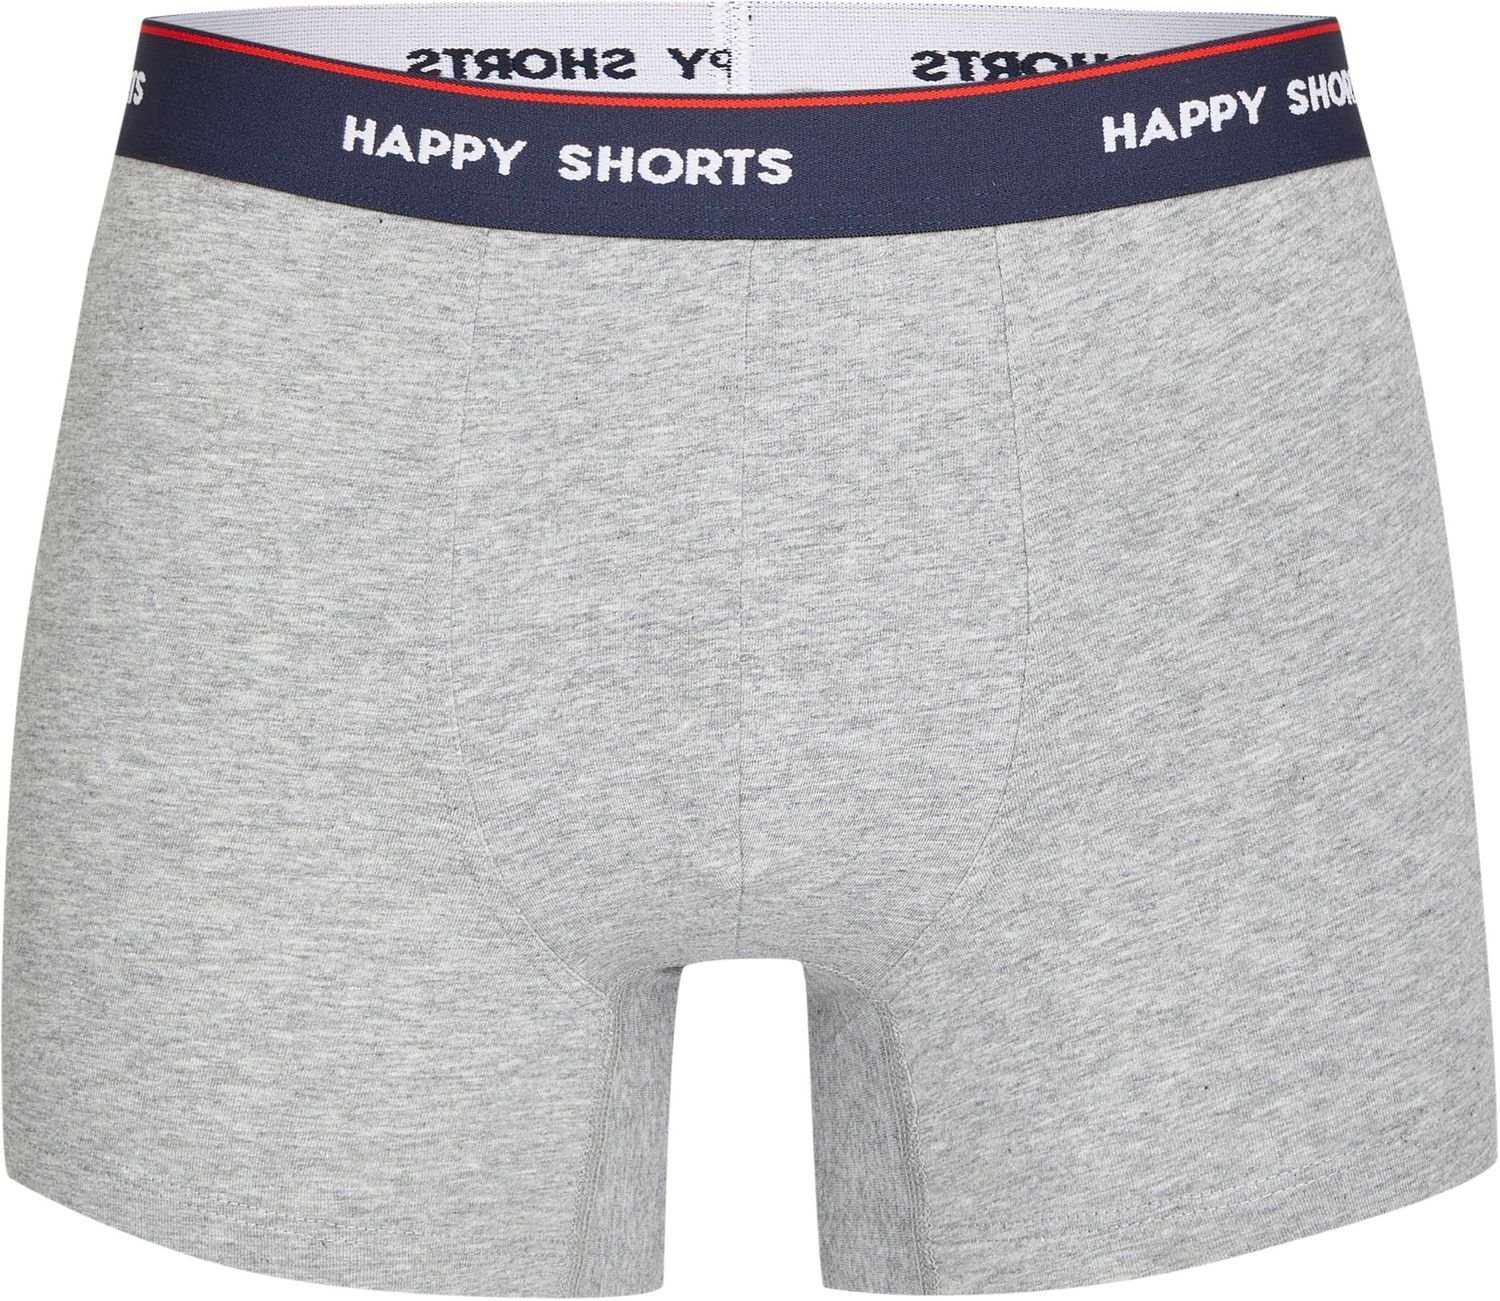 Wäsche/Bademode Boxershorts HAPPY SHORTS Trunk 3 Stück Happy Shorts Jersey Trunk Herren Boxershorts Pants Boxer witzige Designs 